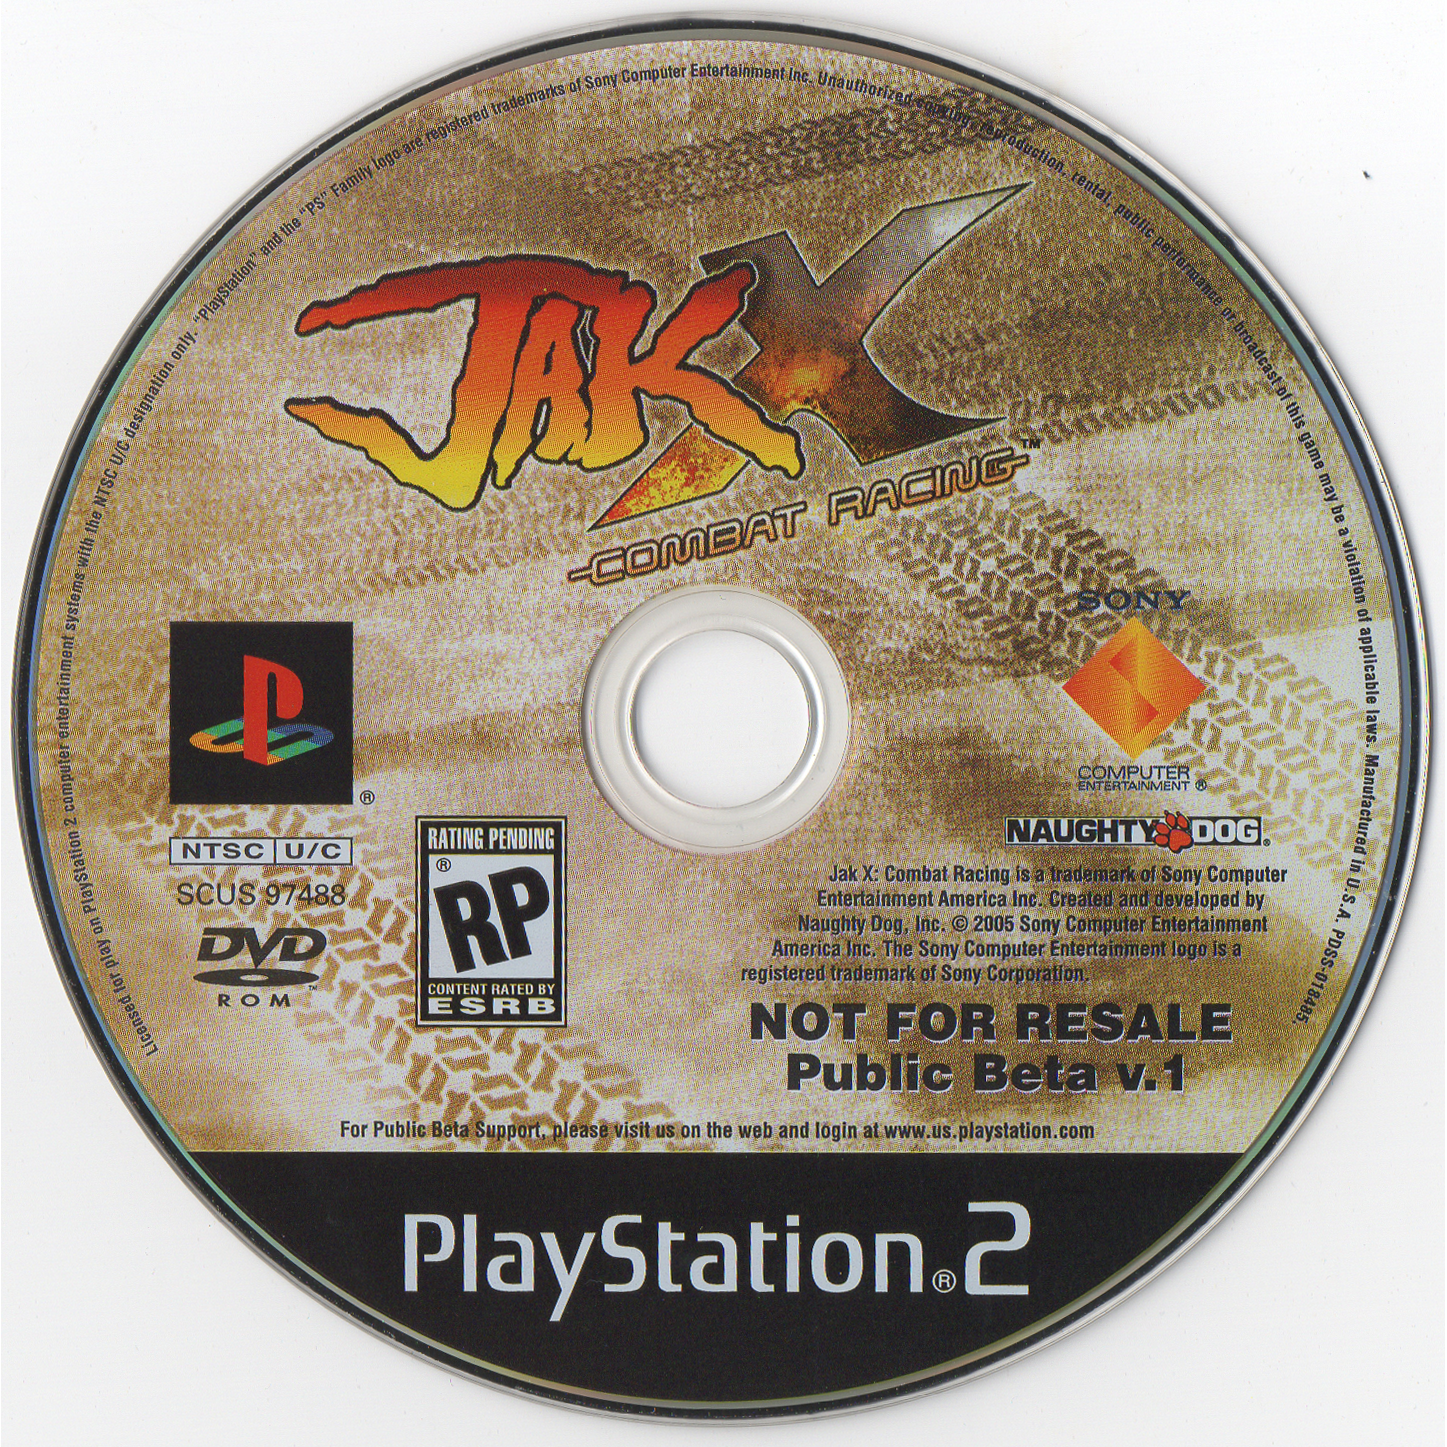 PS2 - Jak X Combat Racing Not For Resale Public Beta V.1